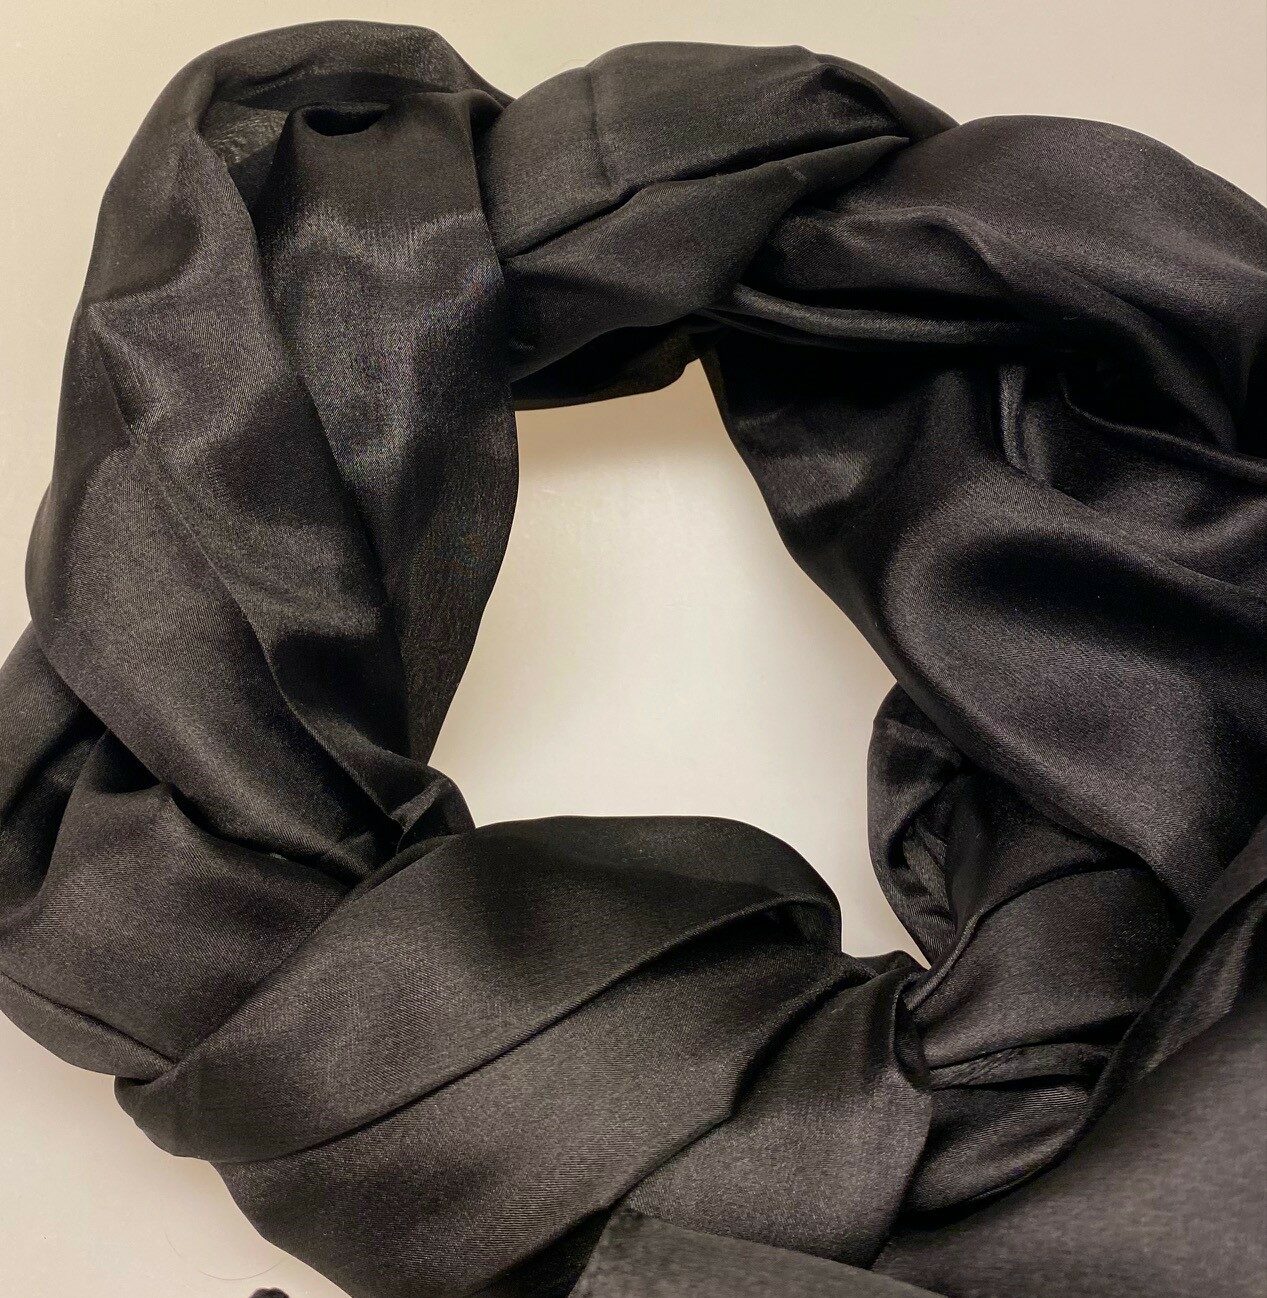 Silketørklæde Pongé 1410 XL - Sort, stort, sjal, stola, ensfarvet, enkelt, lækkert, ren, silke, silkesjal, silketørklæde, bredt, blankt, gave, fest, biti, ribe